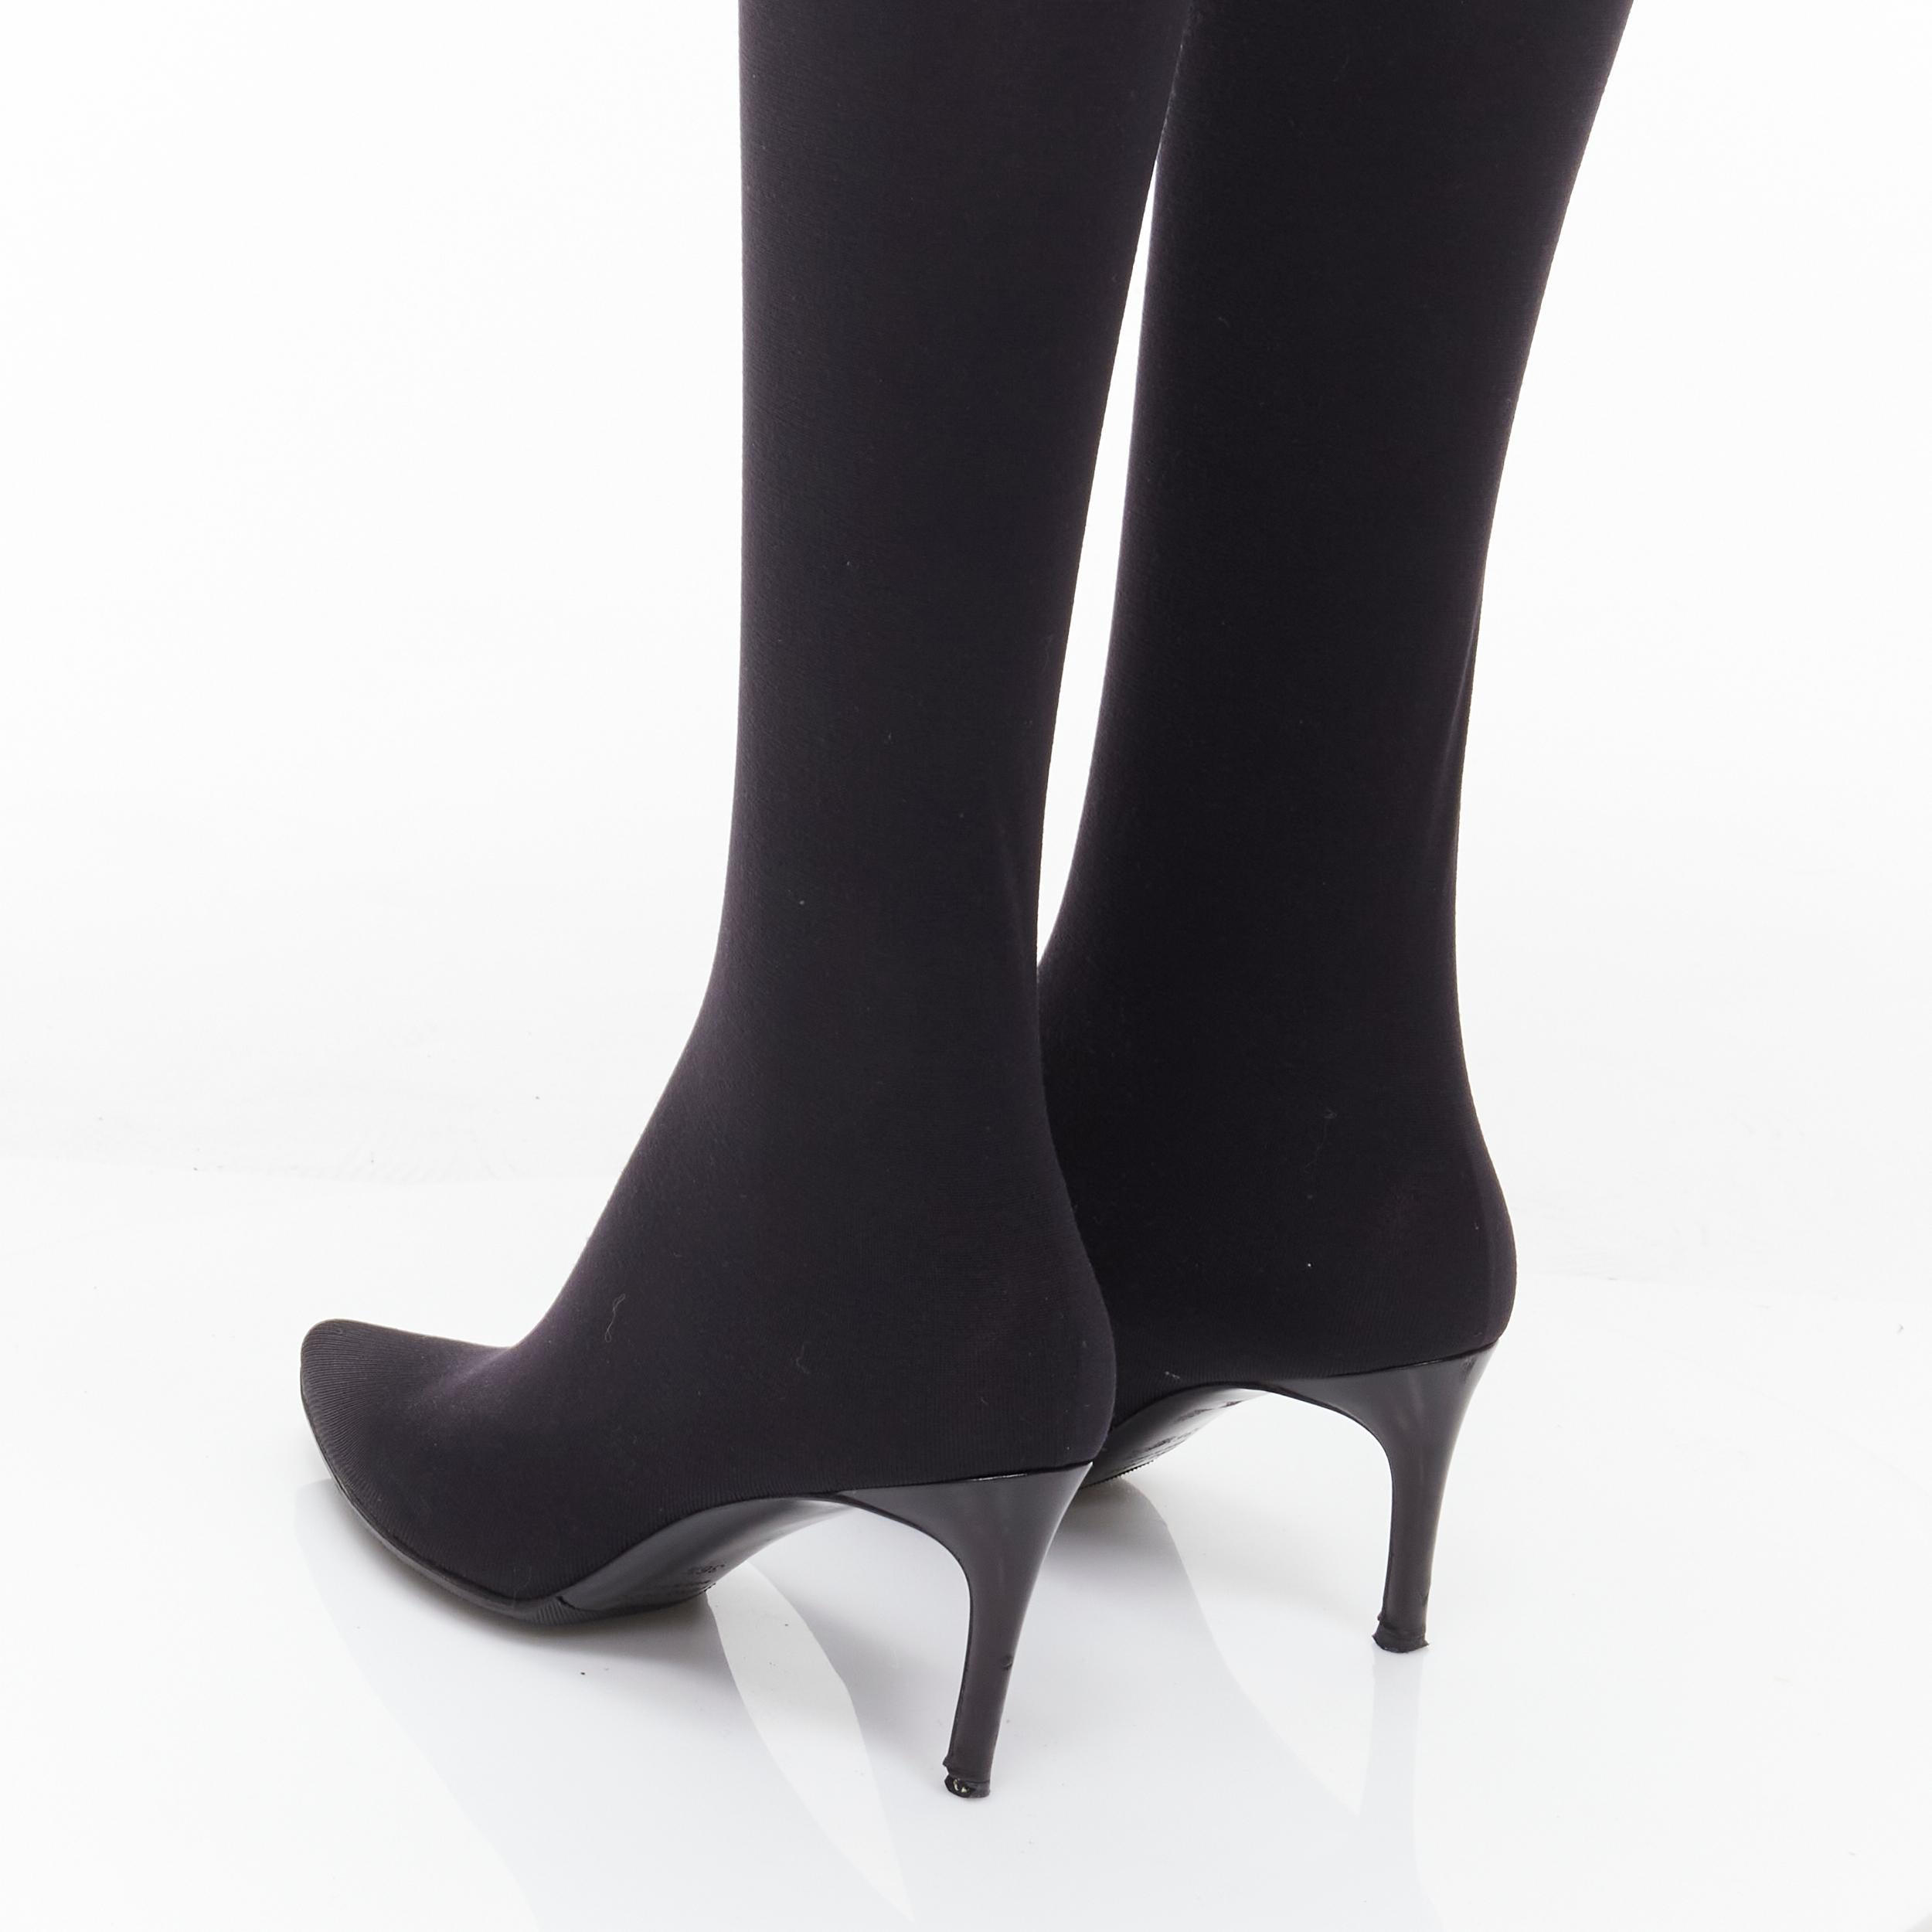 HELMUT LANG Vintage black stretchy stocking knit mid heel knee high boots EU36.5 4